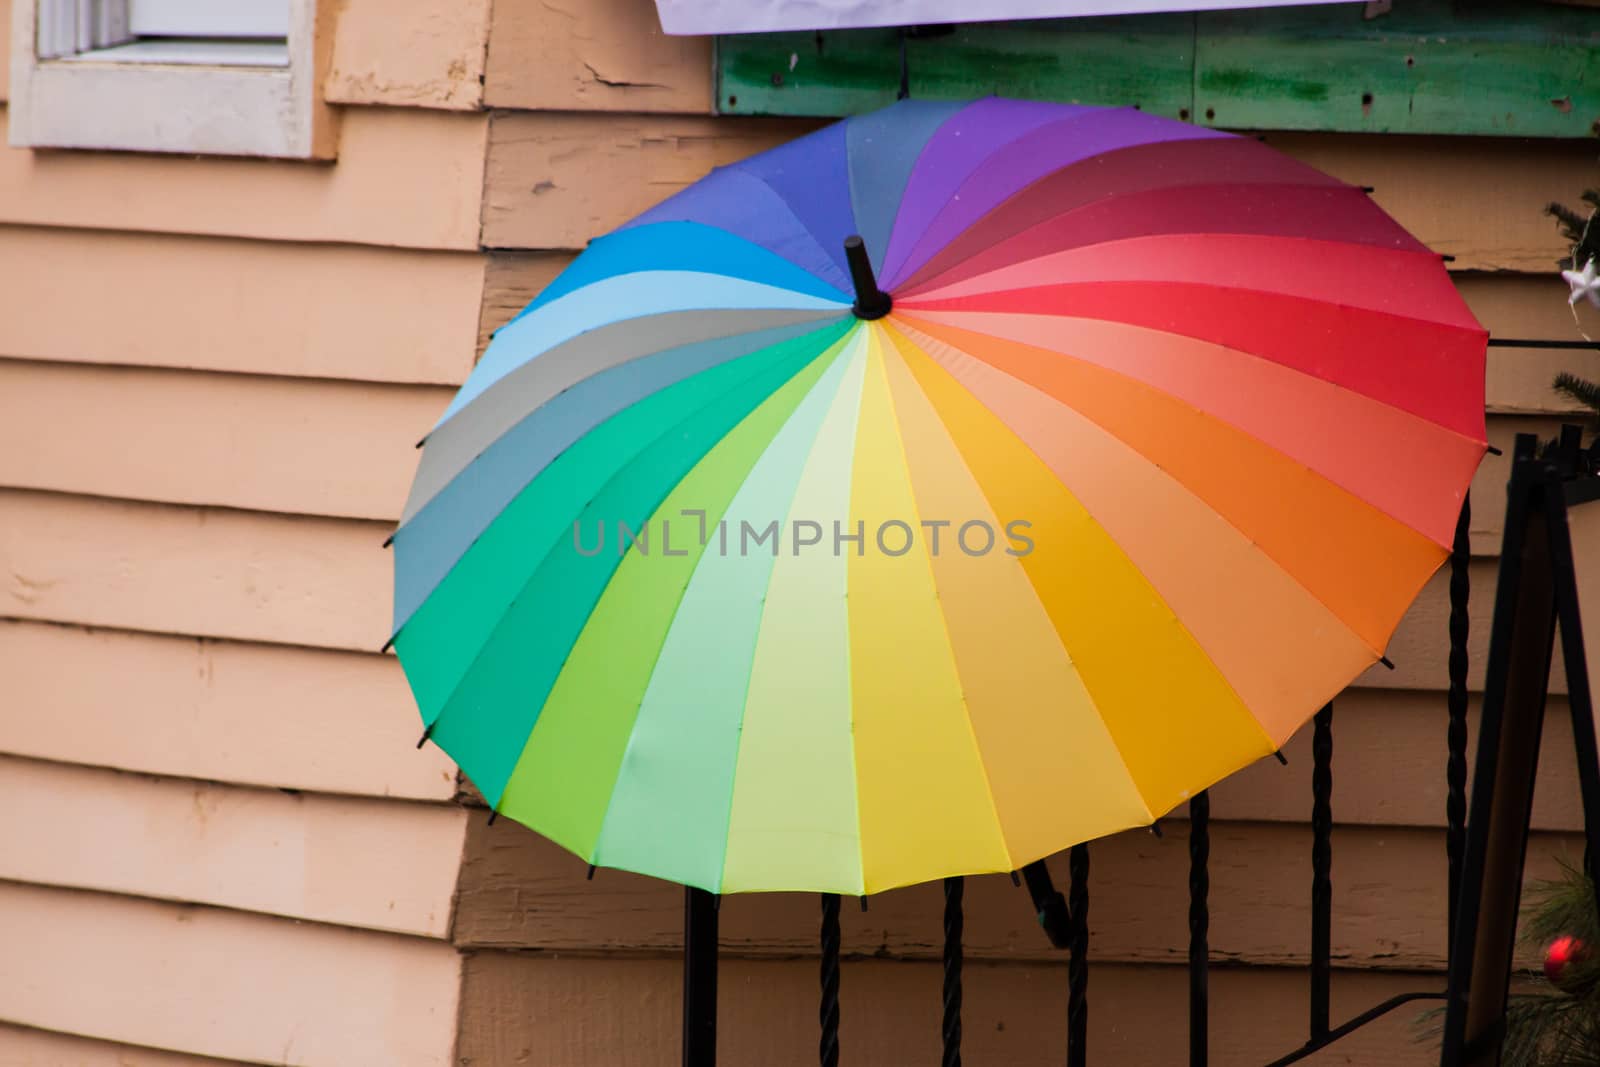 A happy rainy day,colourful umbrella by Ralli